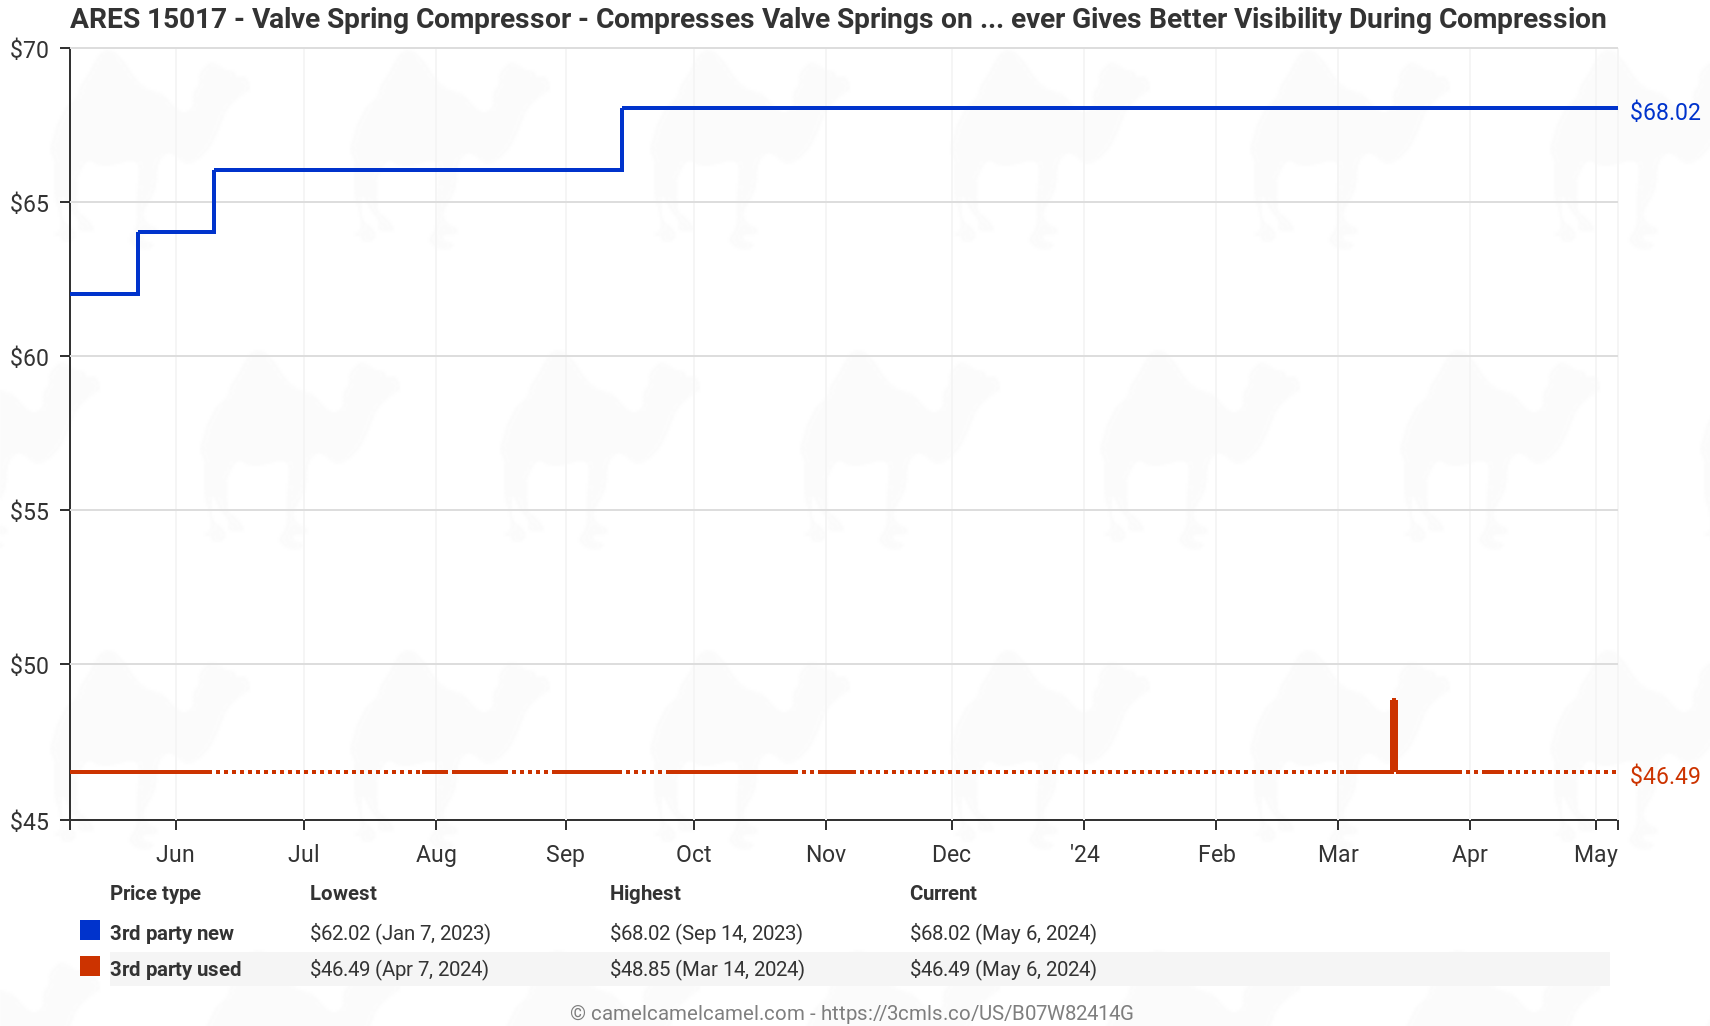 ARES 15017 - Valve Spring Compressor - Compresses Valve Springs on Overhead Valve Engines - Direct Action Compressor Lever Gives Better Visibility During Compression - Price History: B07W82414G